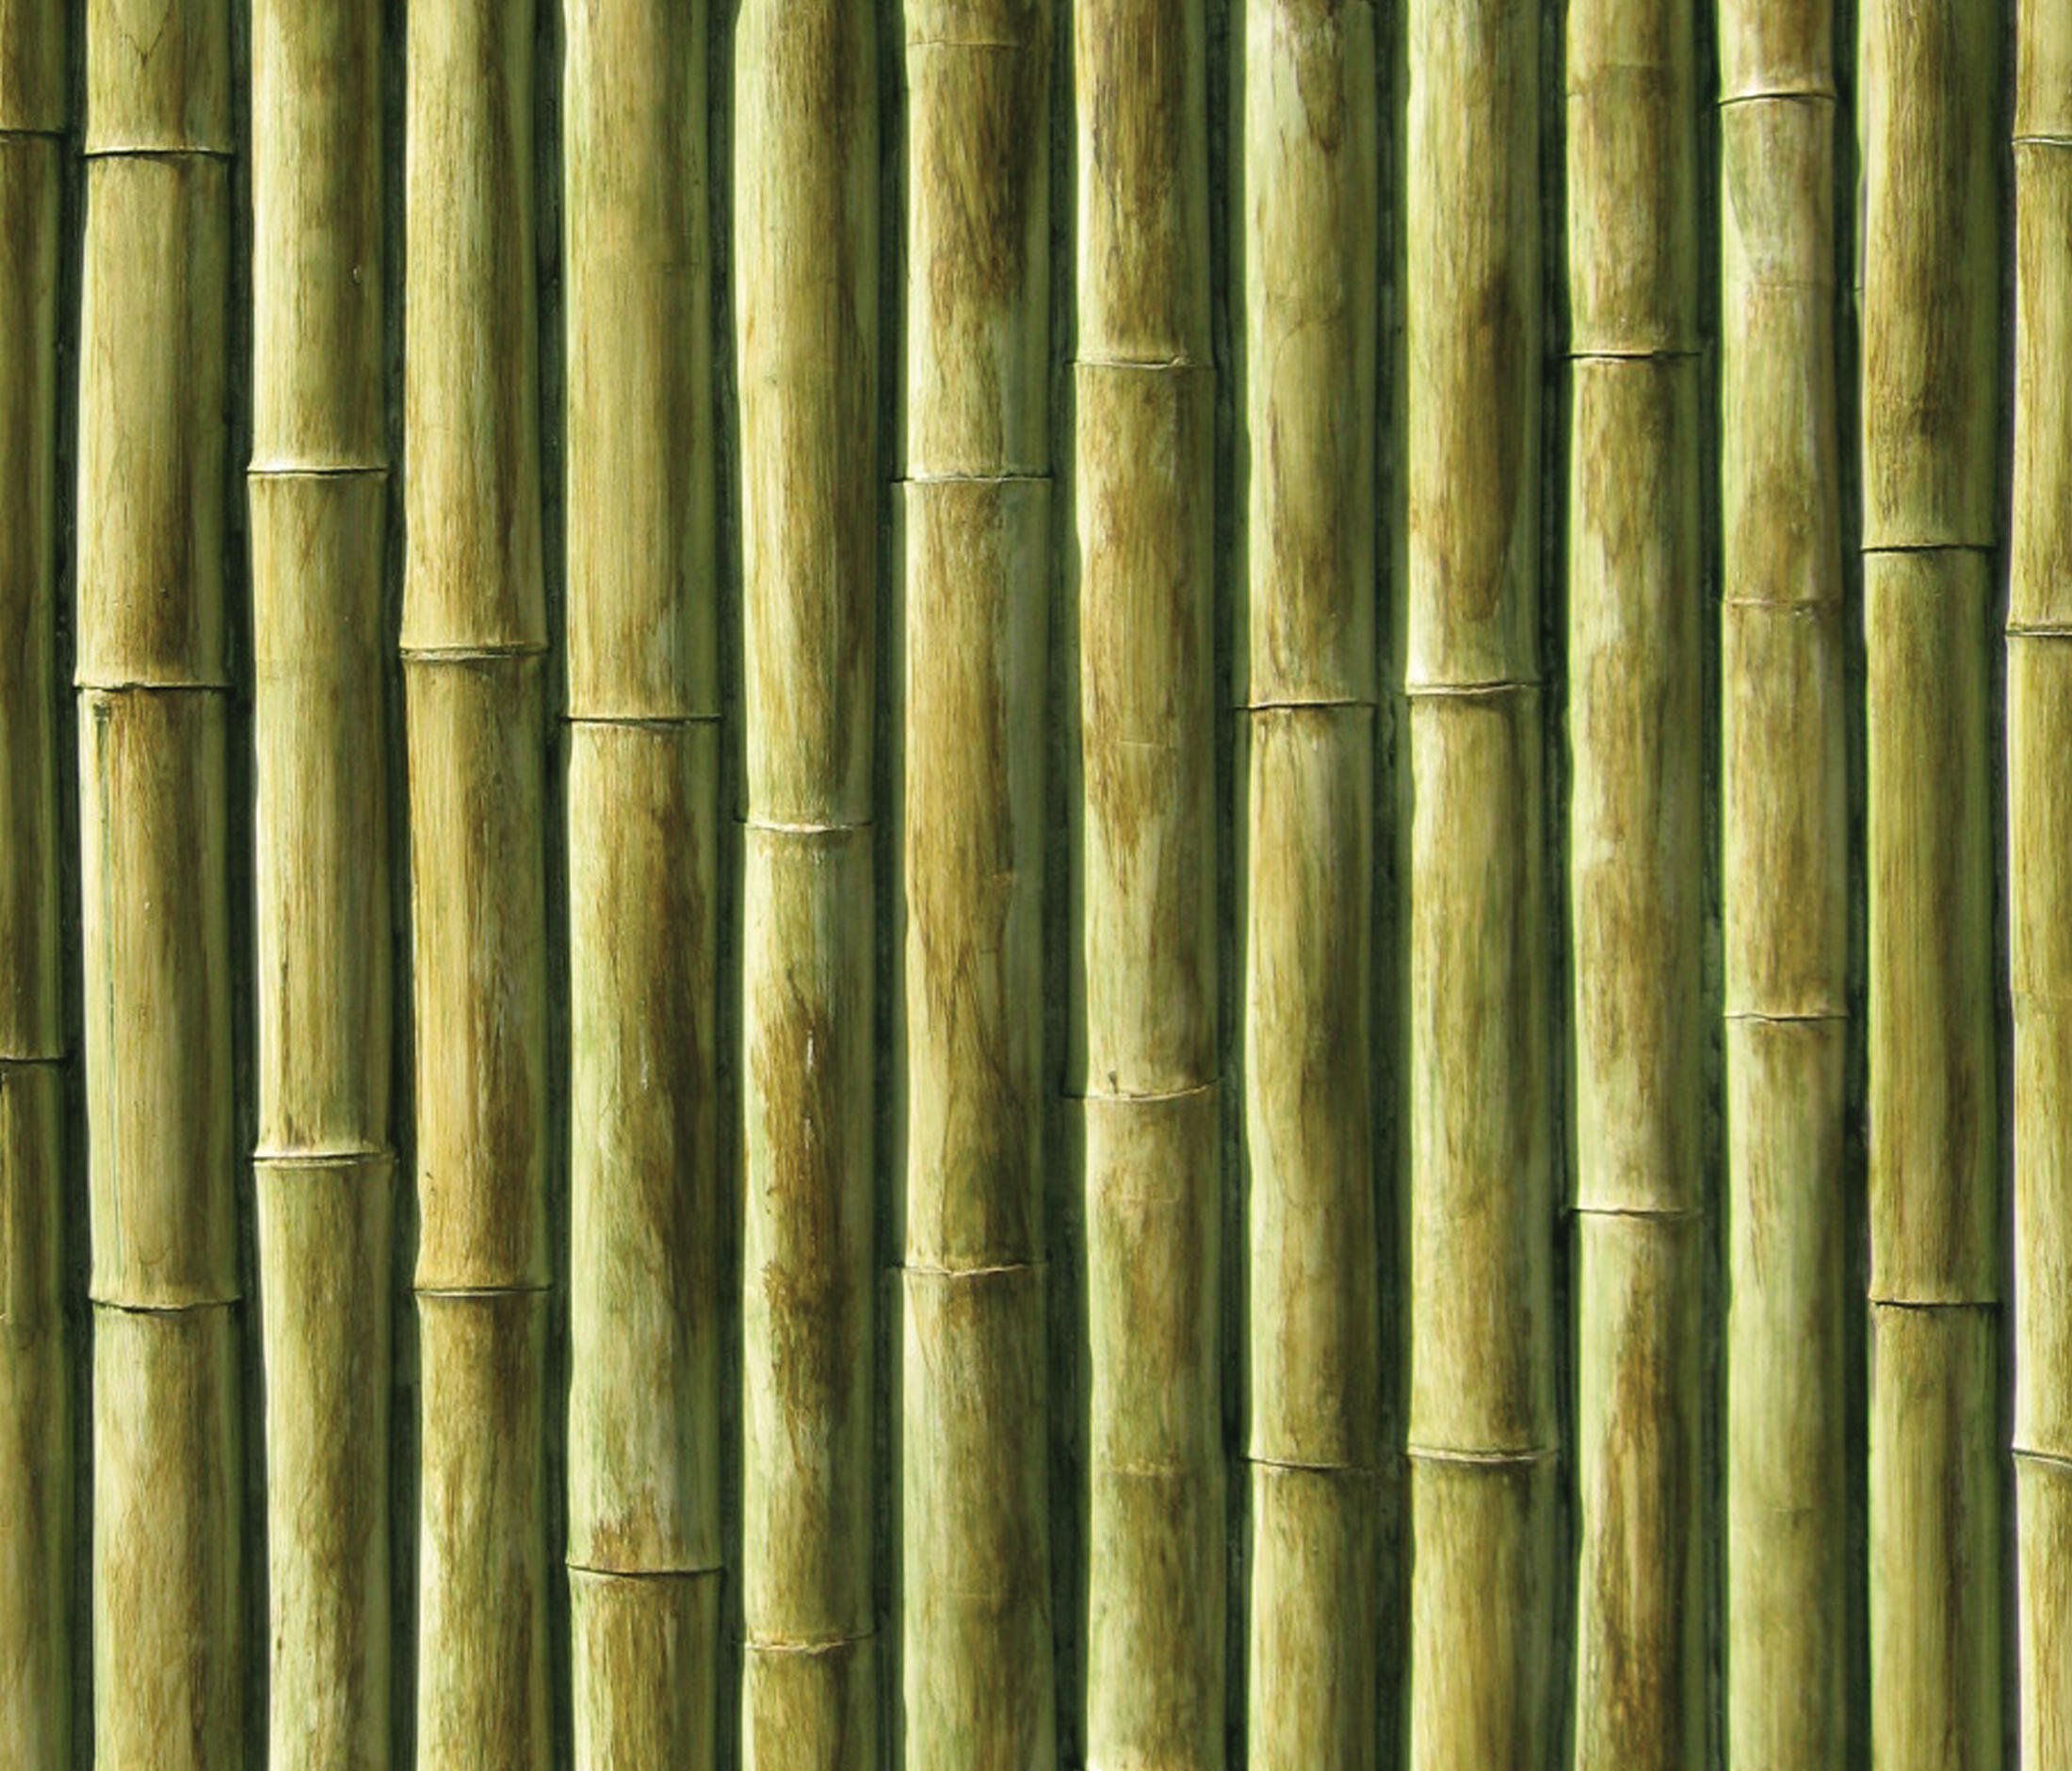 Биг бамбук big bamboo vip. Бамбуковая стена. Бамбуковые панели для стен. Стеновые панели из бамбука. Бамбуковые обои.